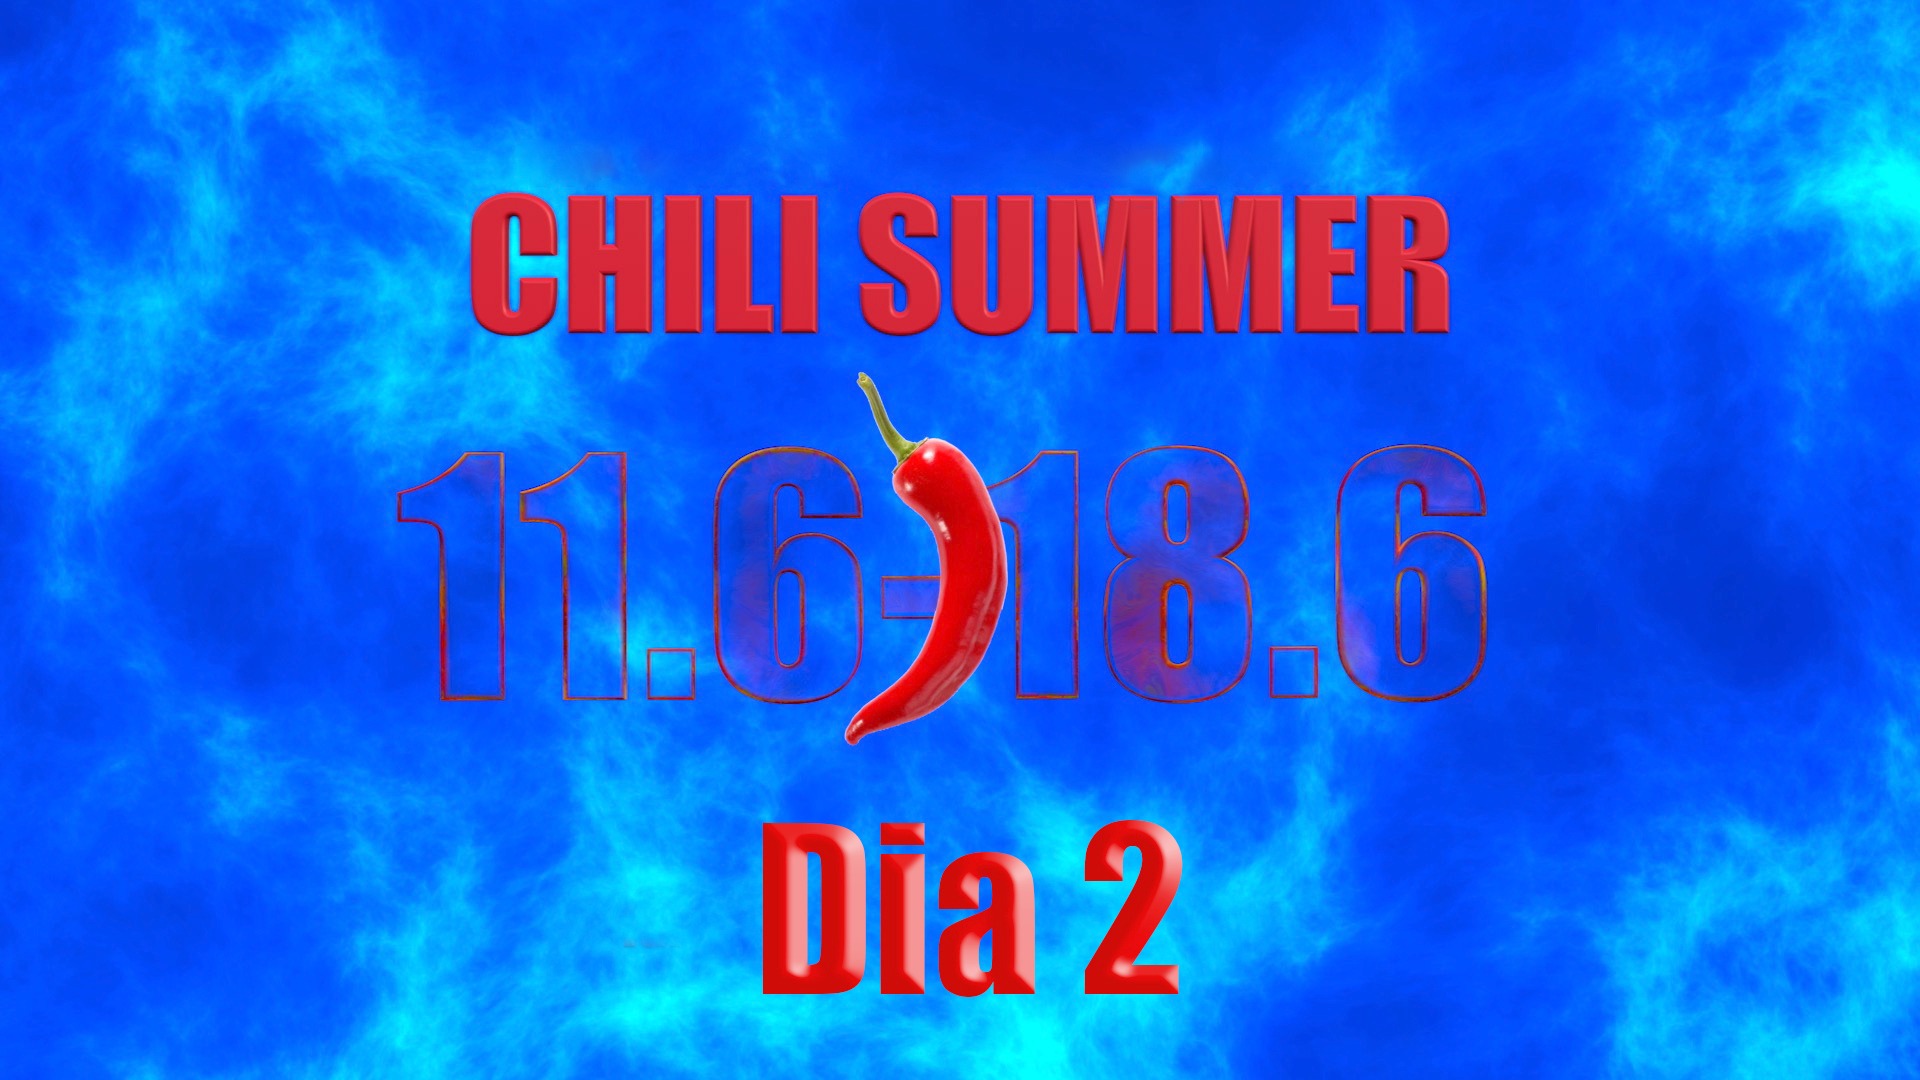 Chili Summer dia 2